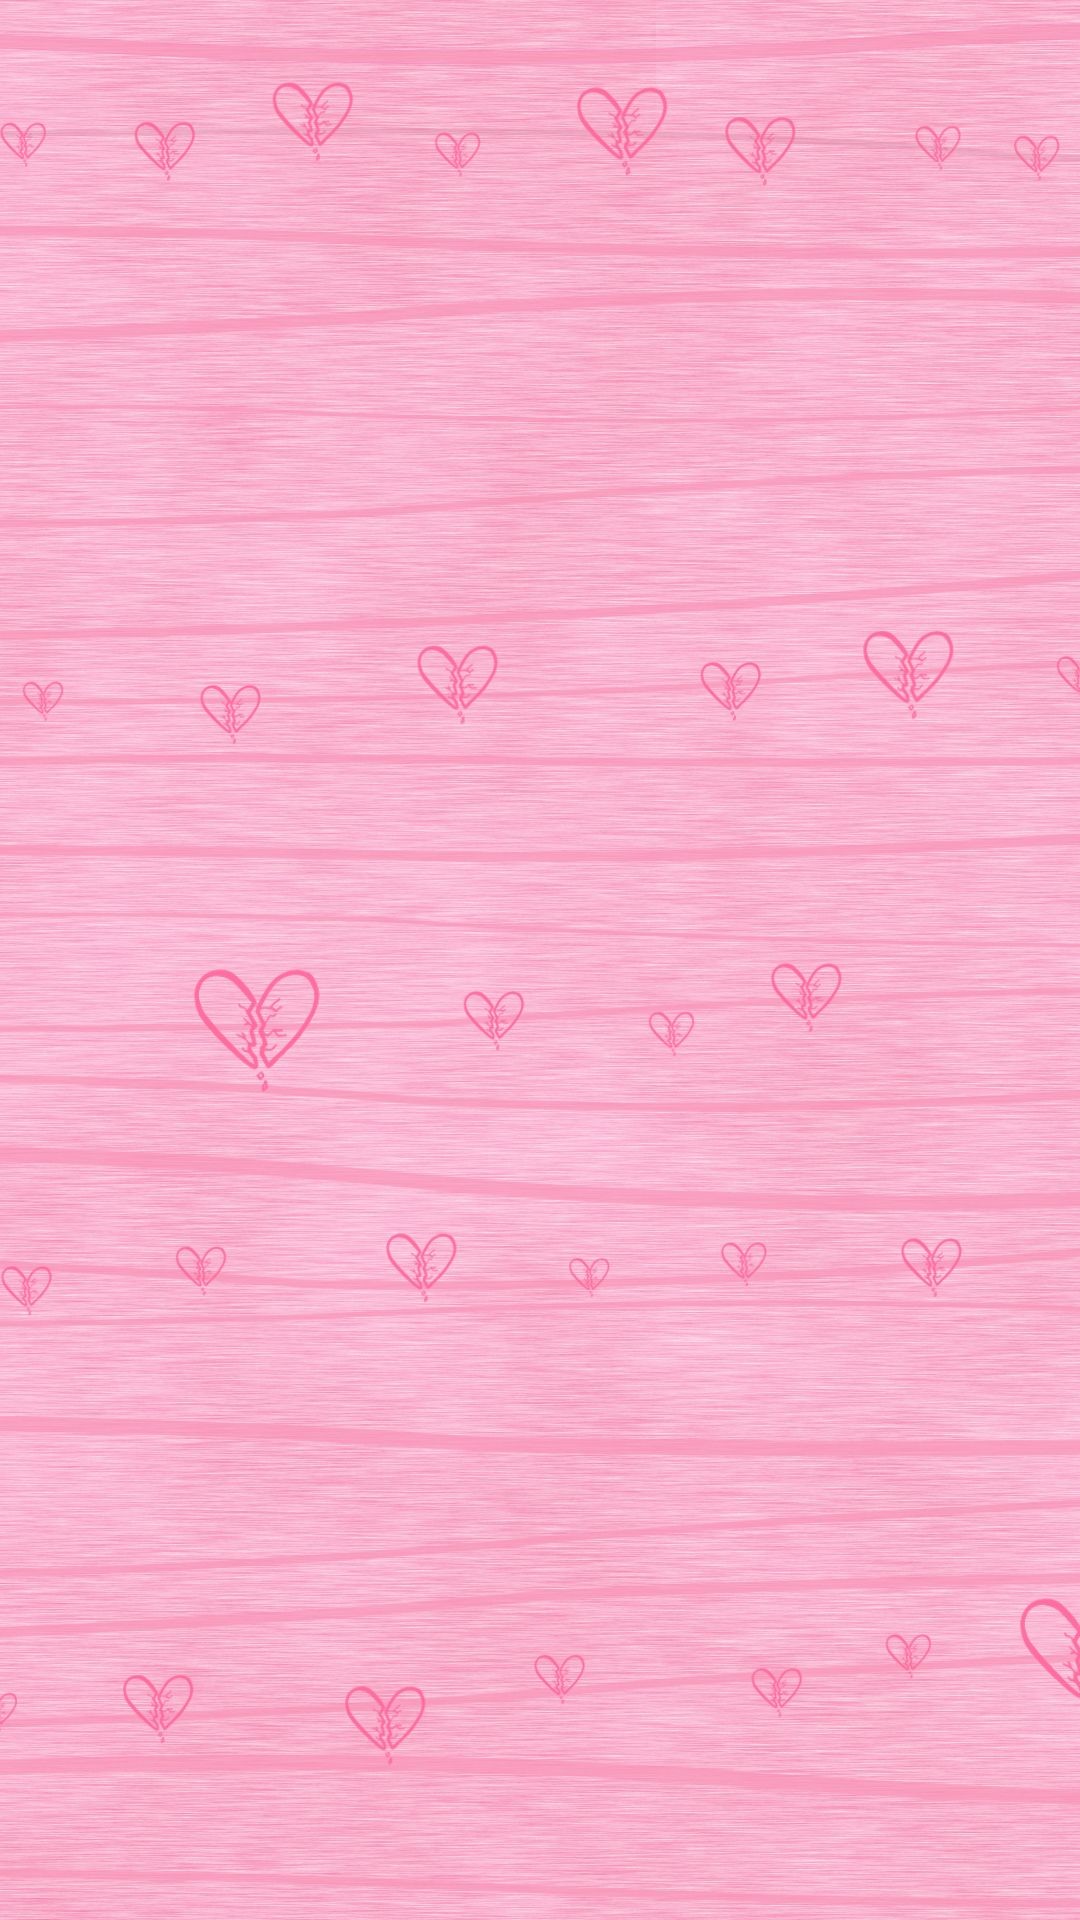 1080x1920 Cute, Pink for girl wallpaper ð